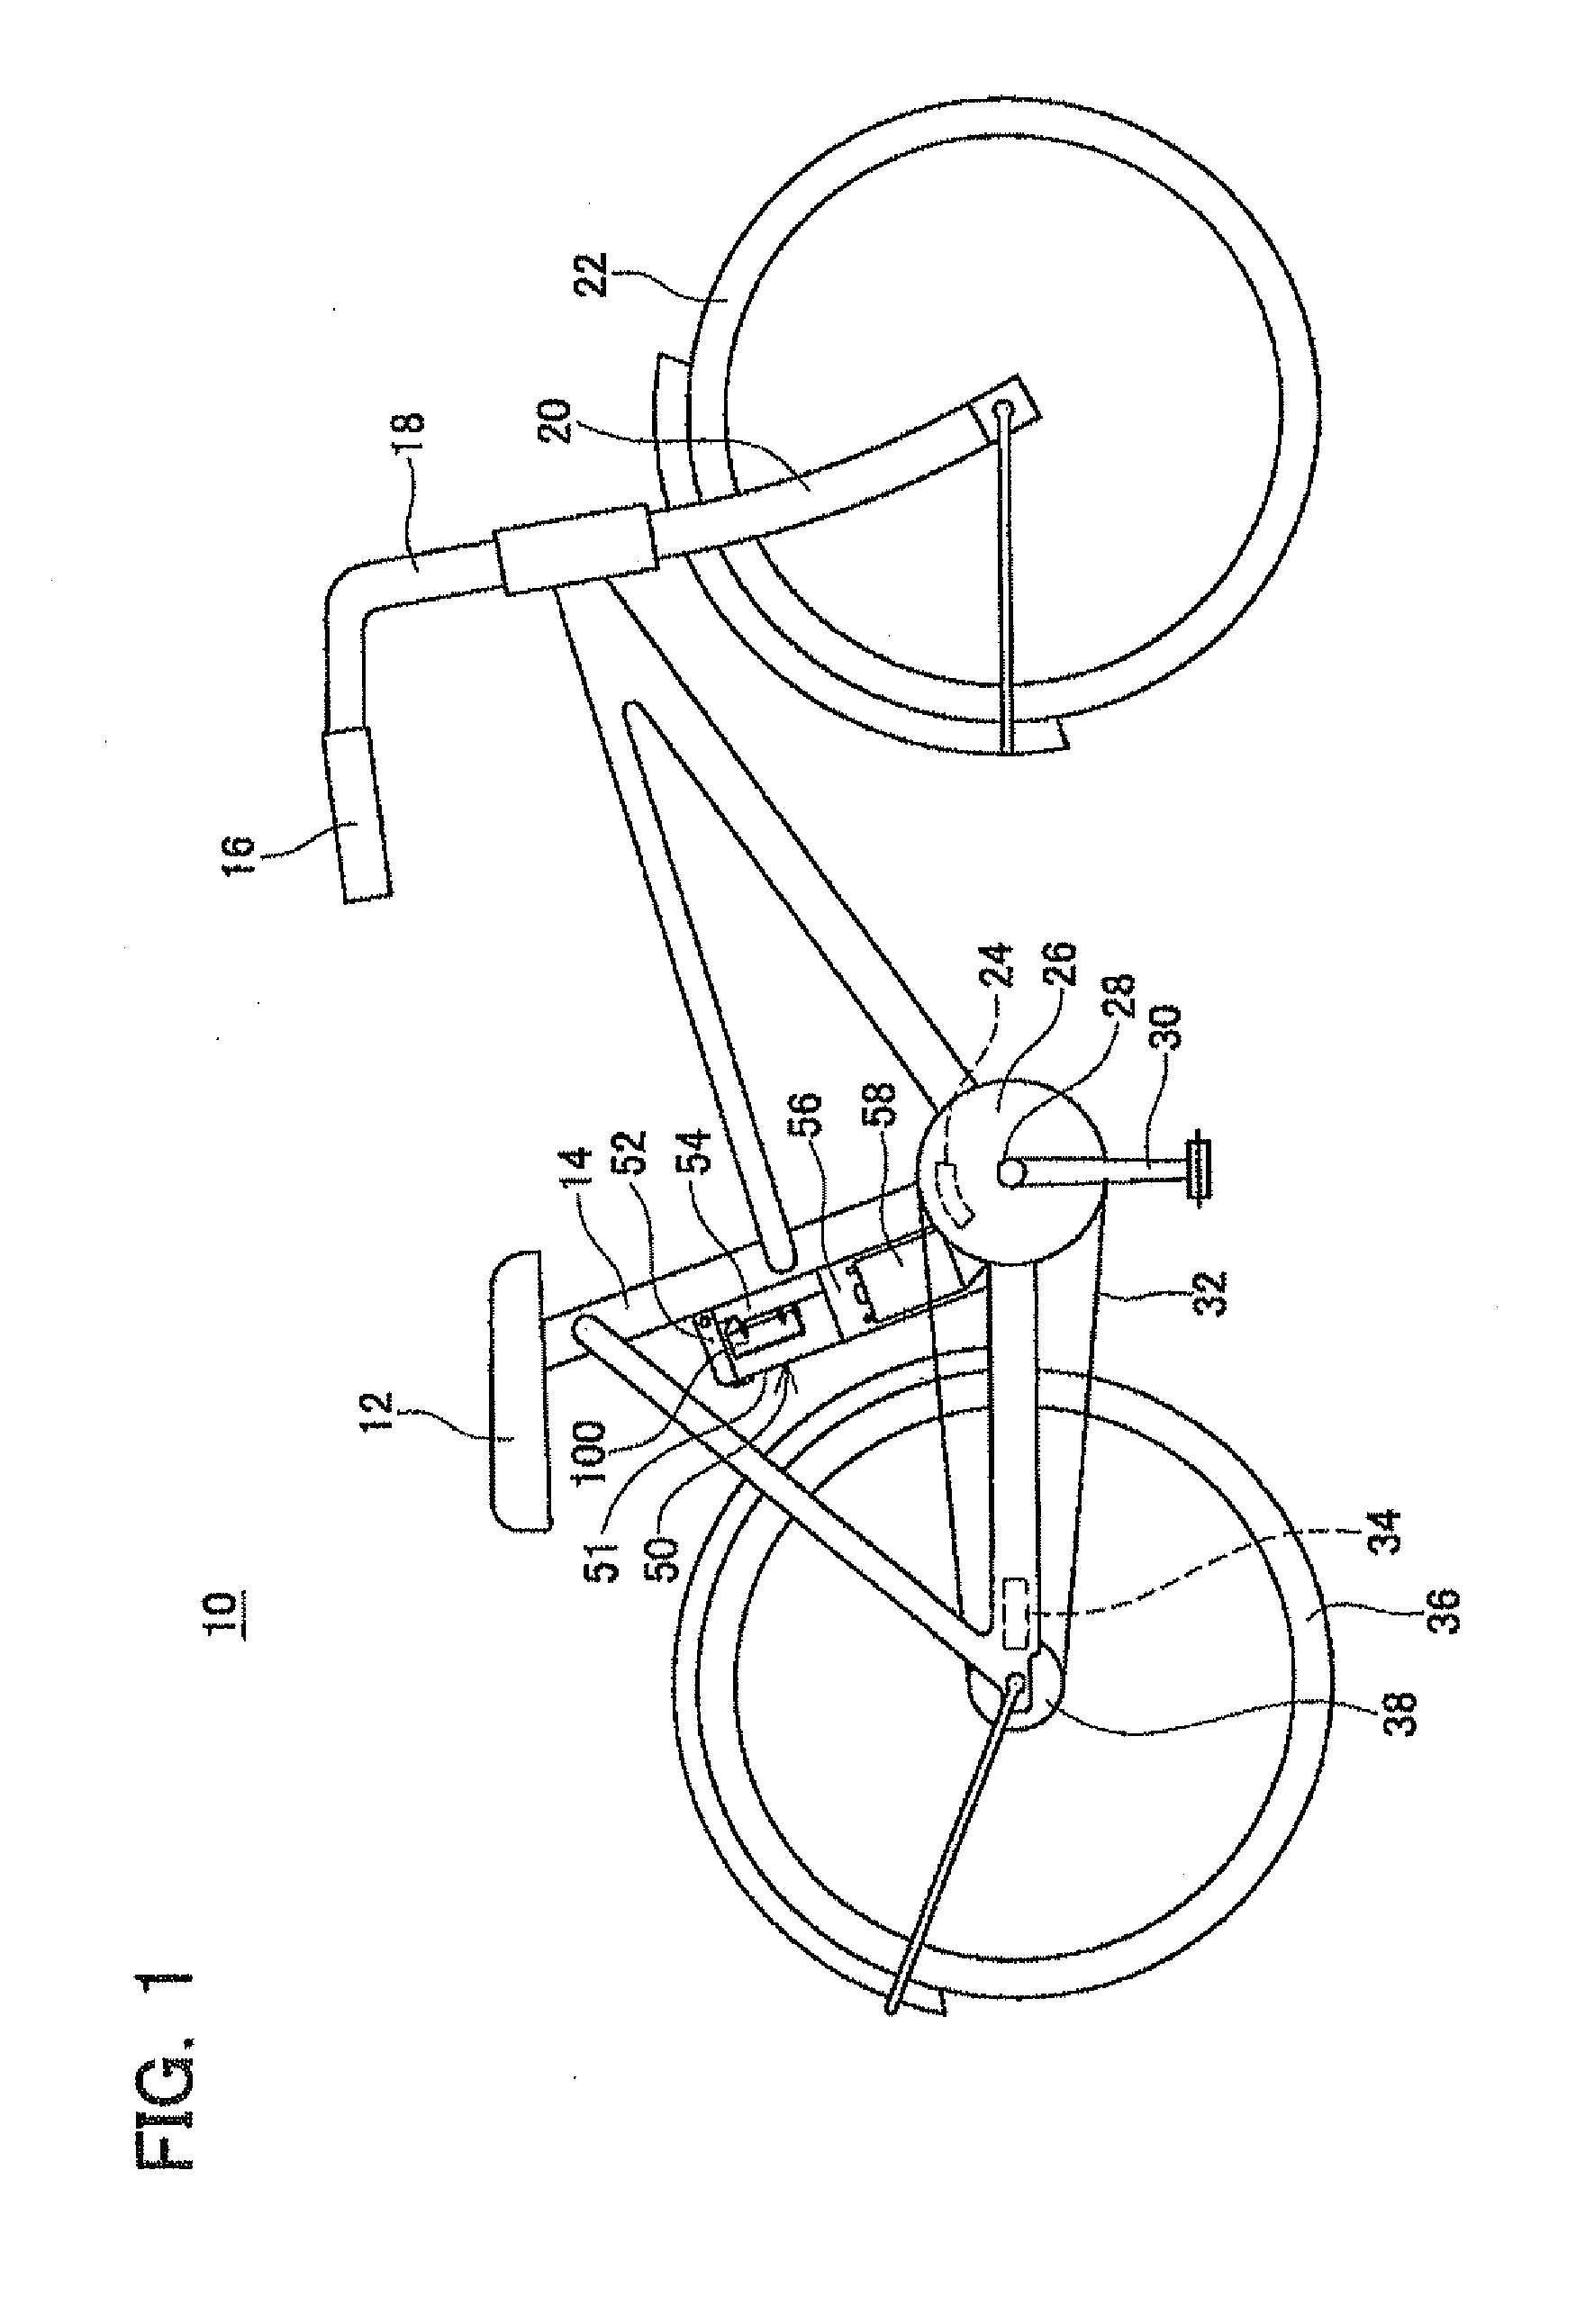 Electric wheeled apparatus